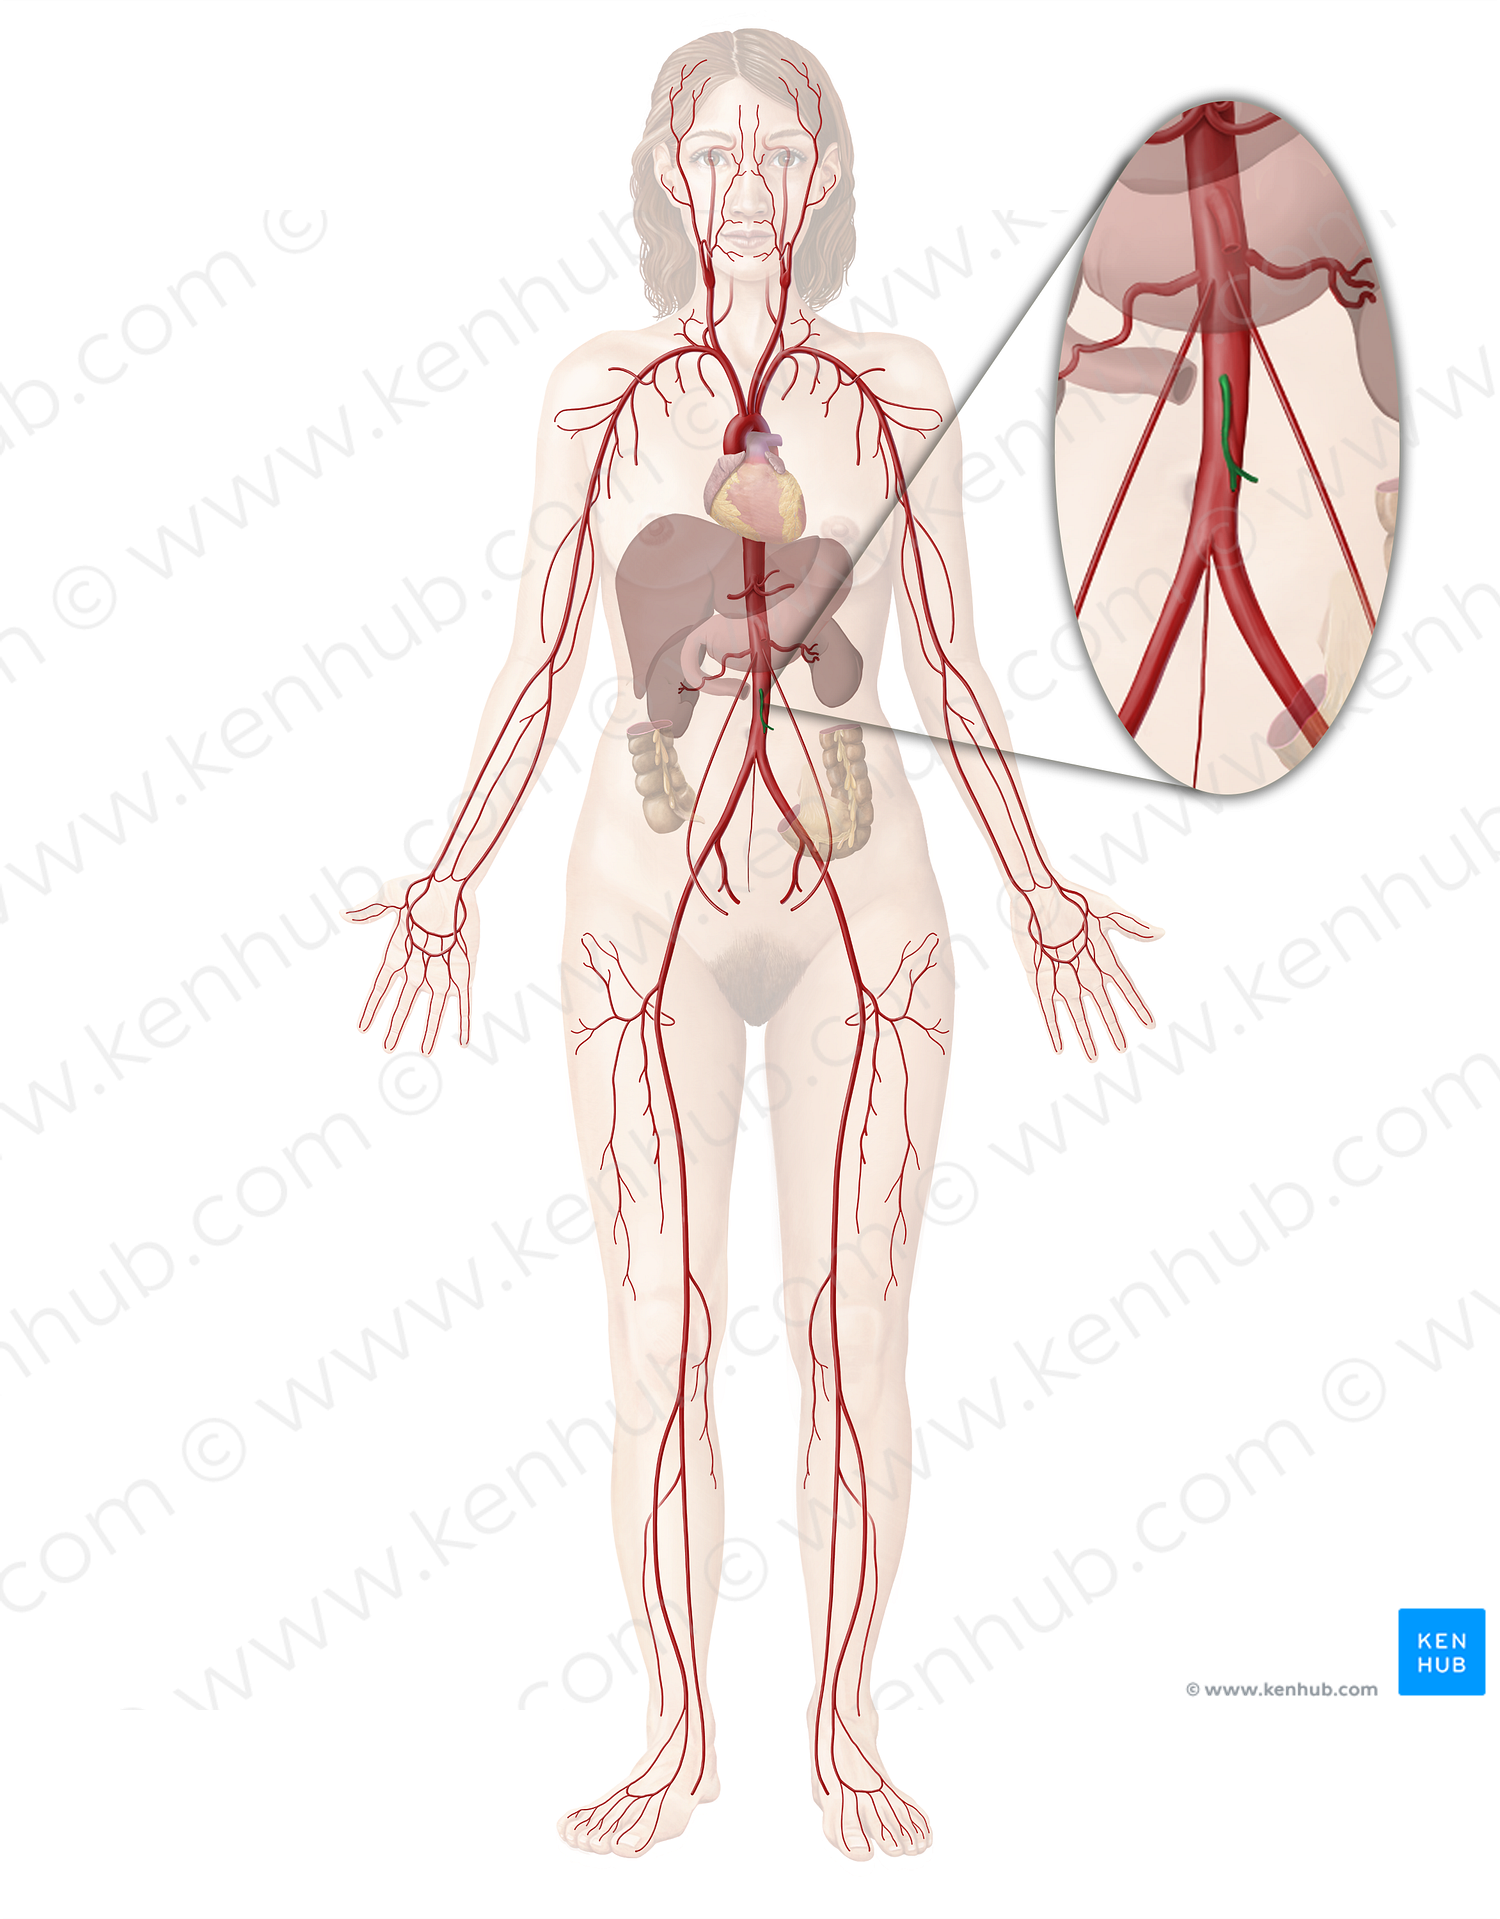 Inferior mesenteric artery (#1518)